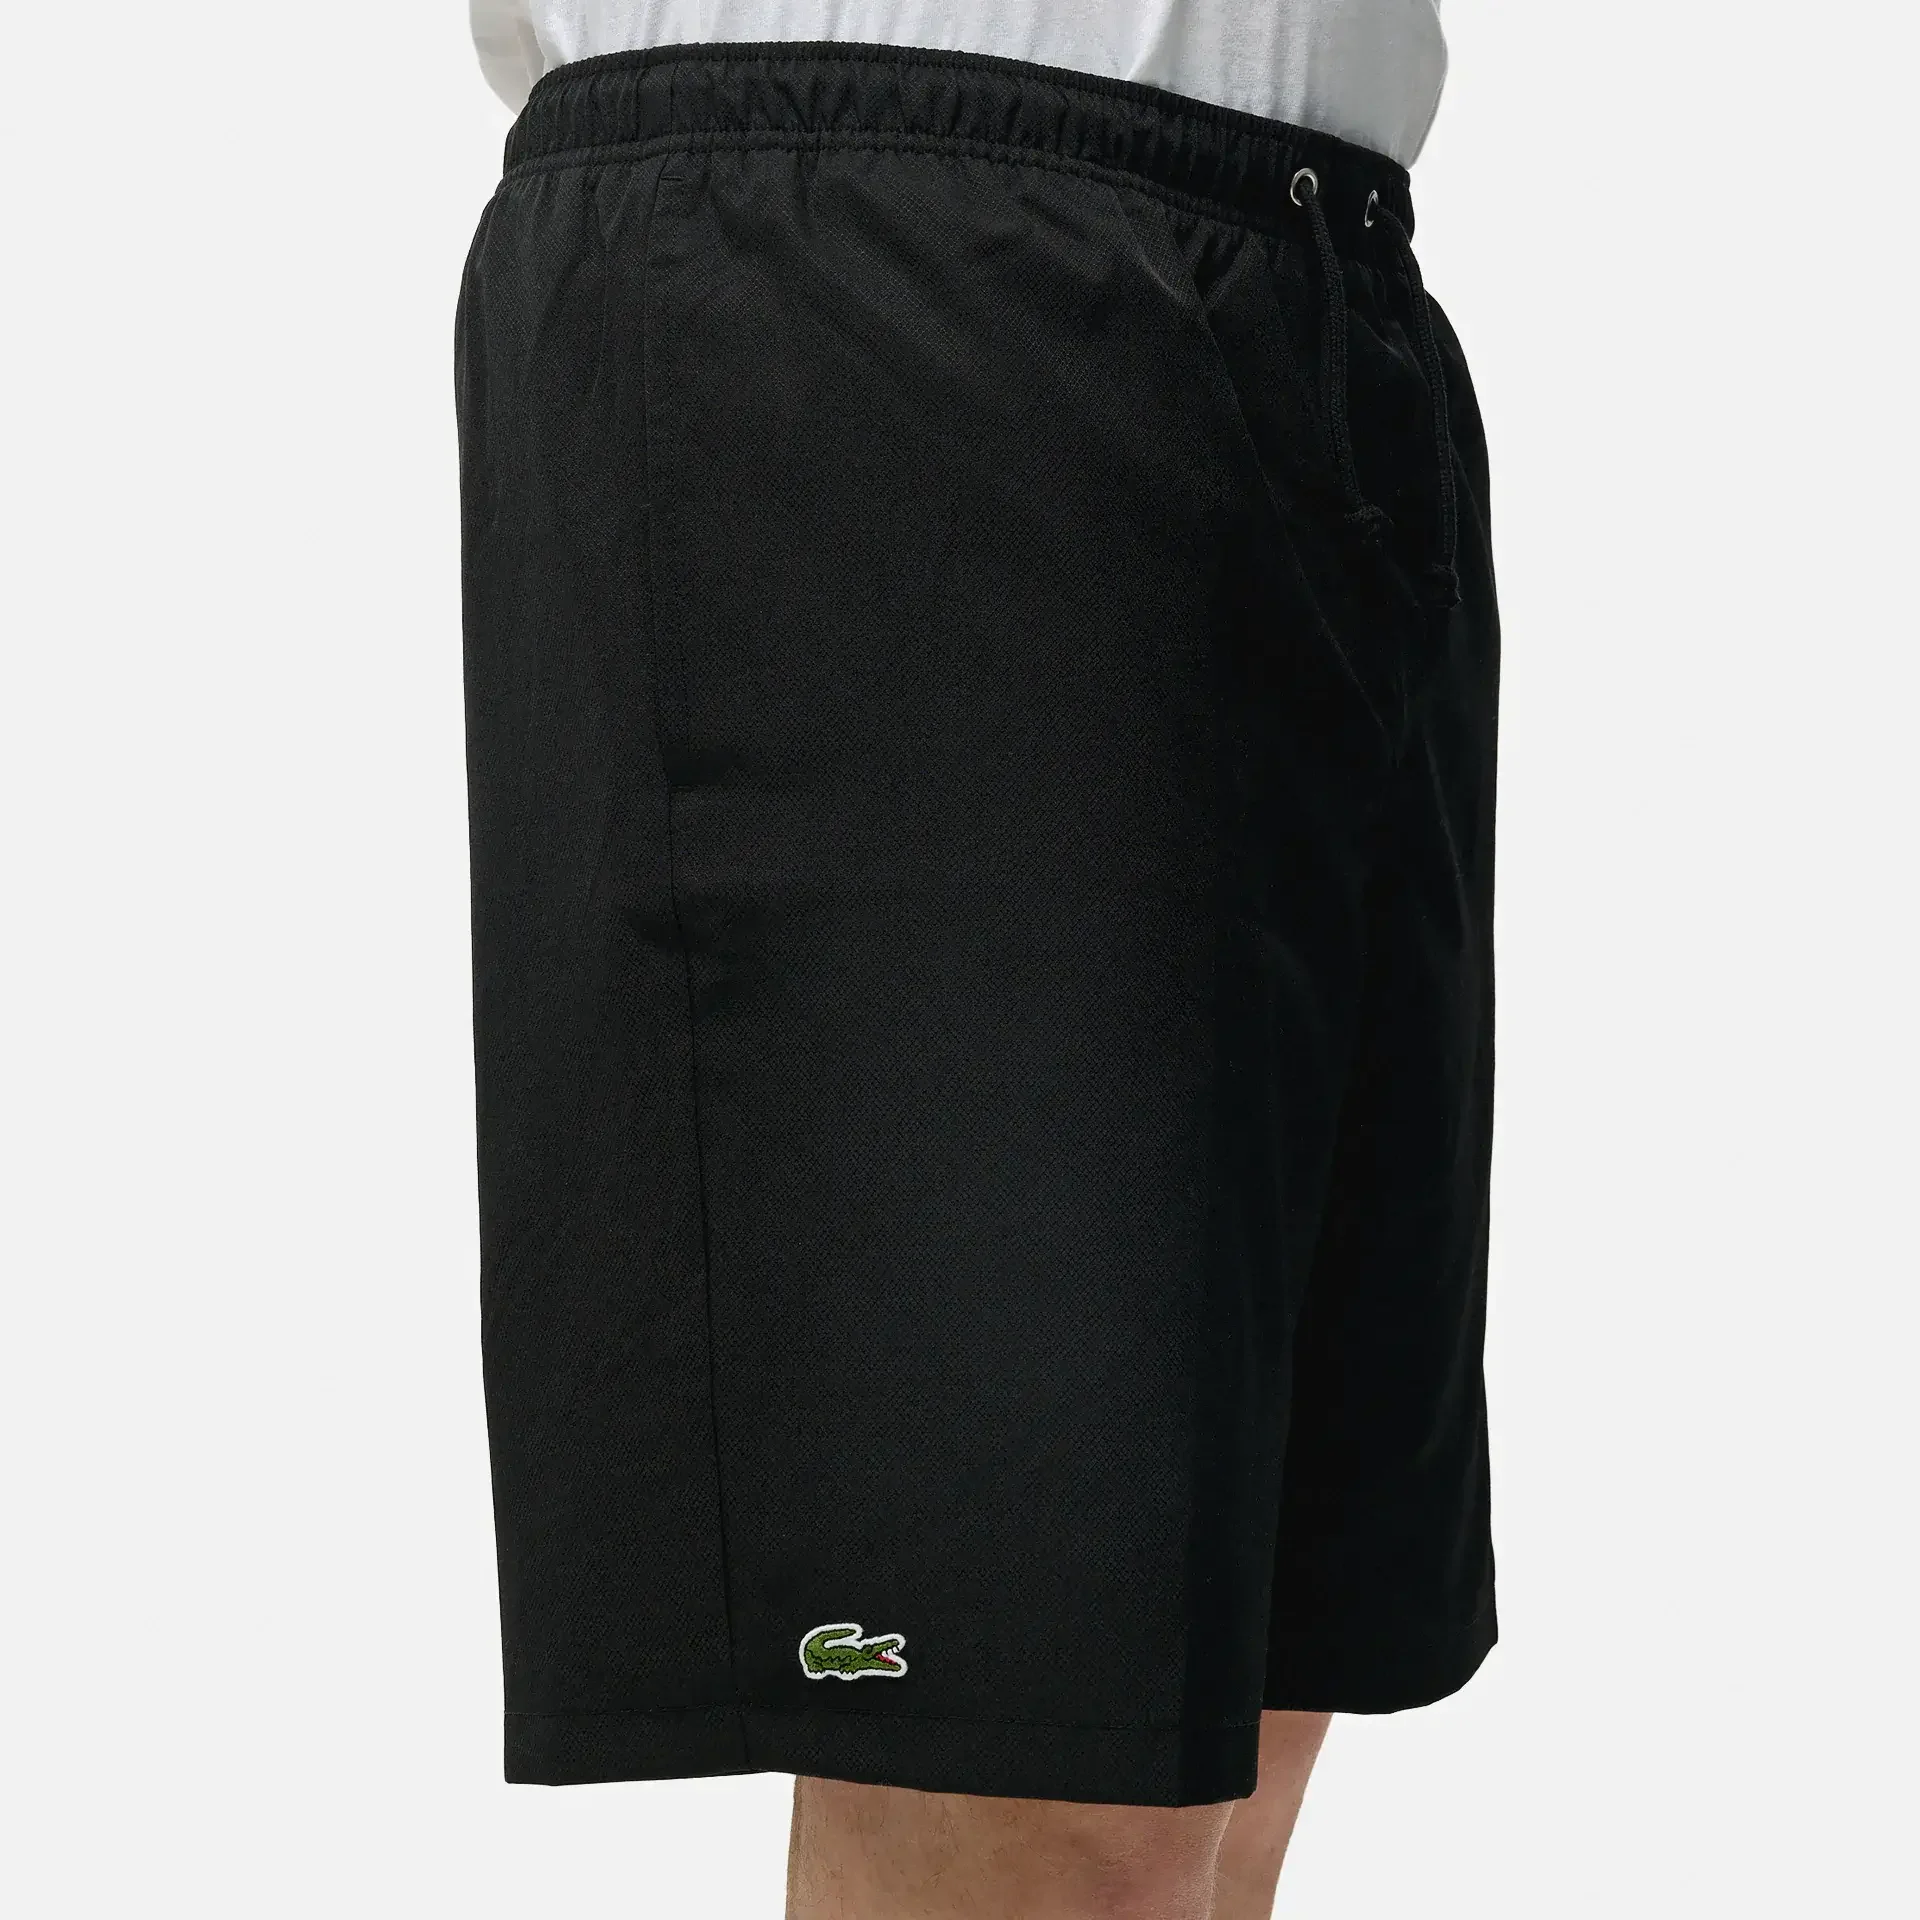 Lacoste Tennis Shorts Black